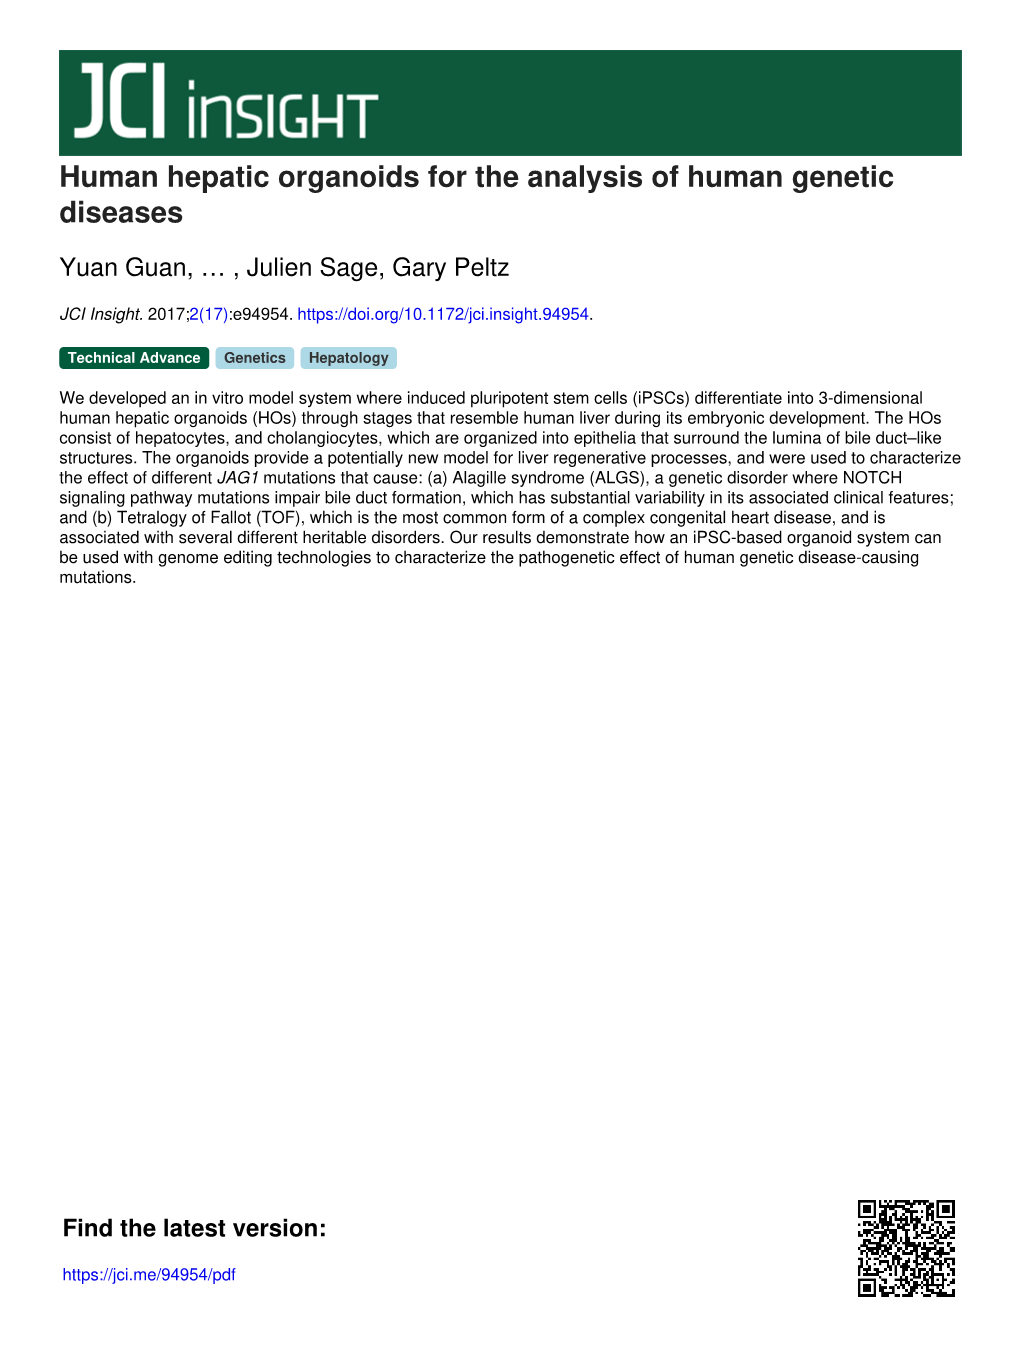 Human Hepatic Organoids for the Analysis of Human Genetic Diseases